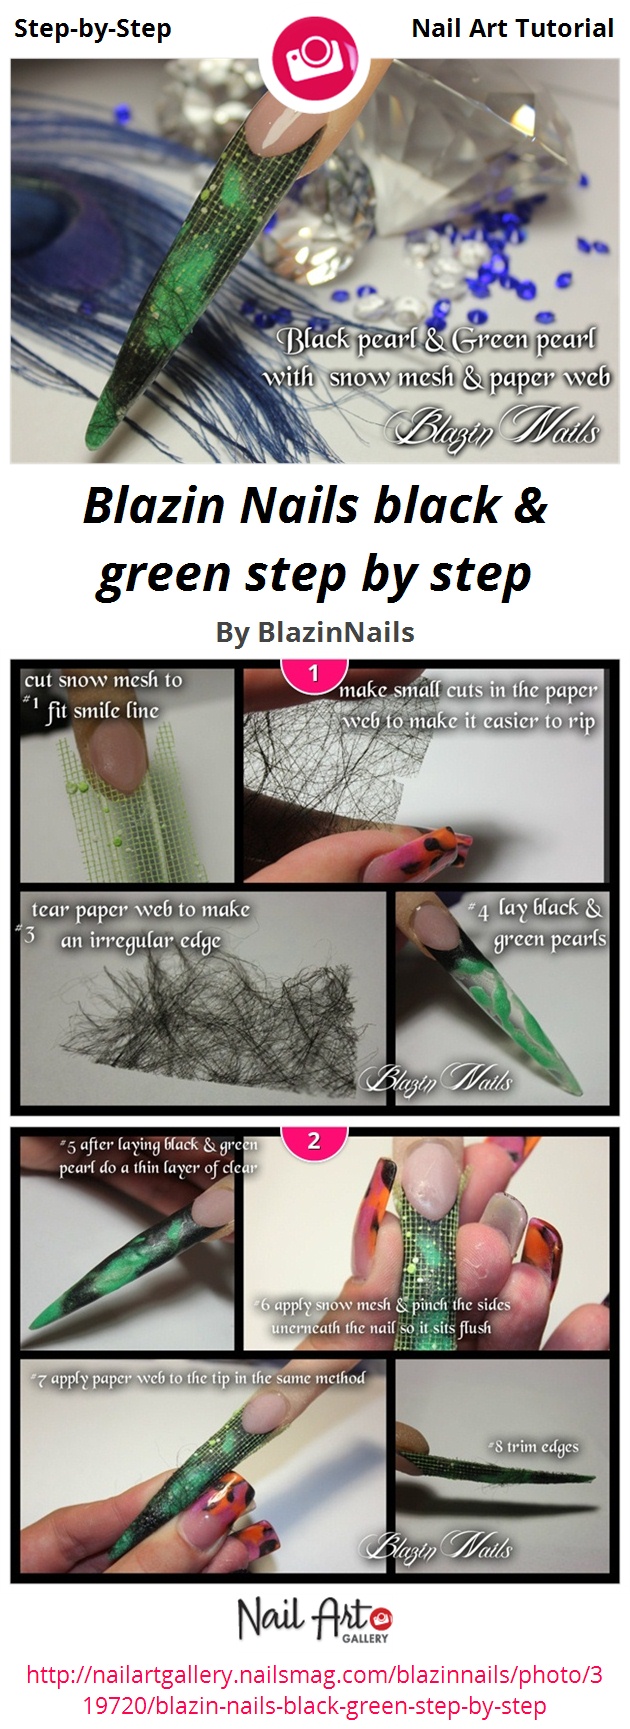 Blazin Nails black & green step by step - Nail Art Gallery